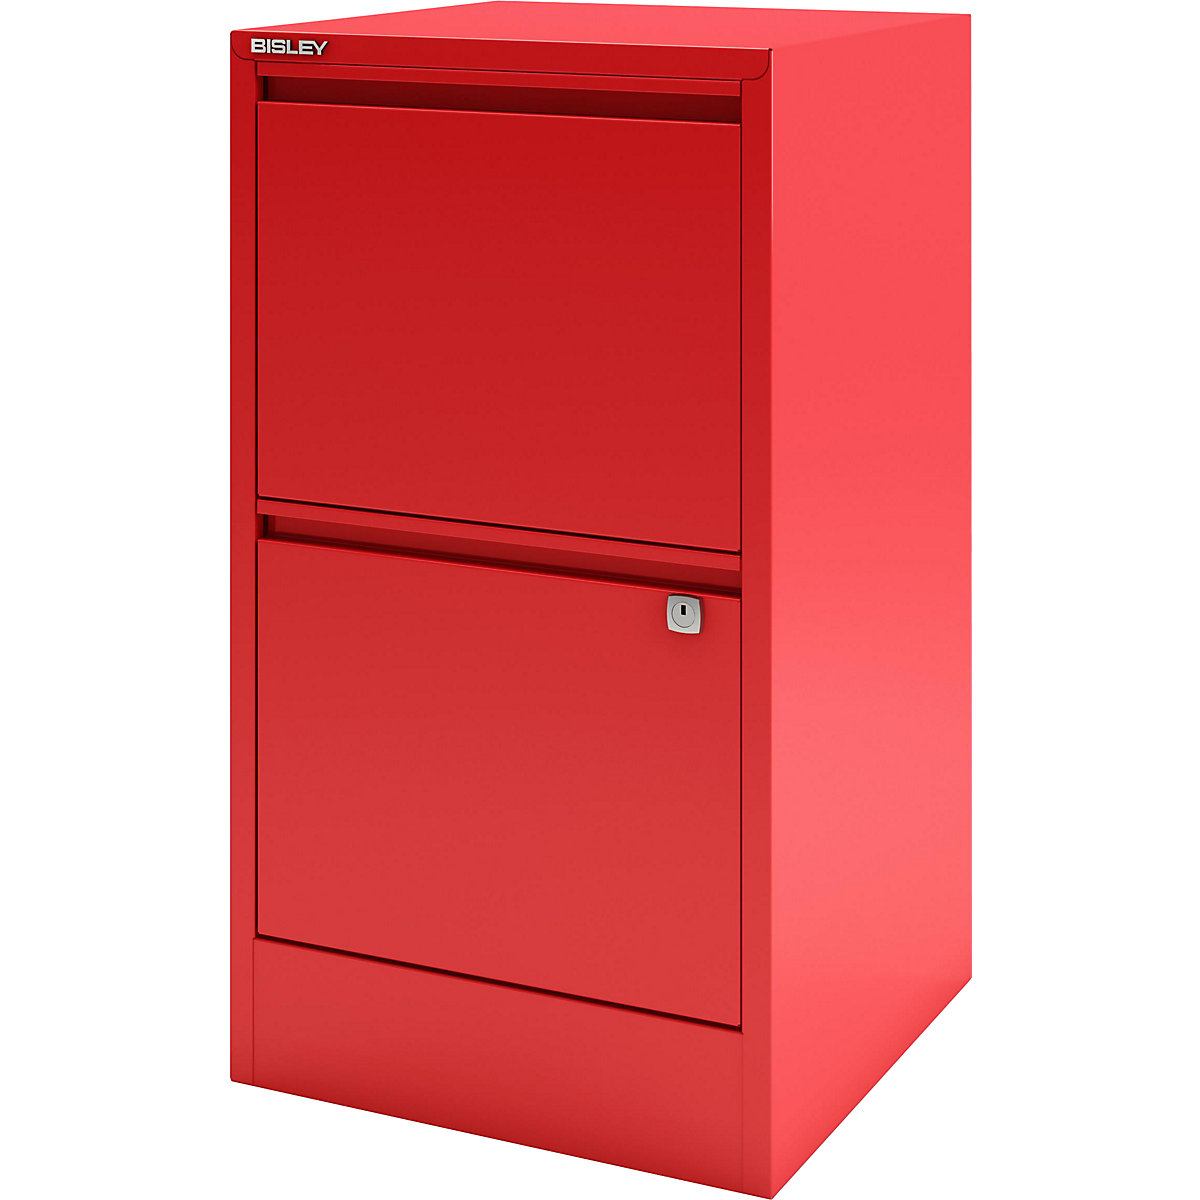 HomeFiler suspension filing cabinet – BISLEY, 2 suspension file drawers, cardinal red-6